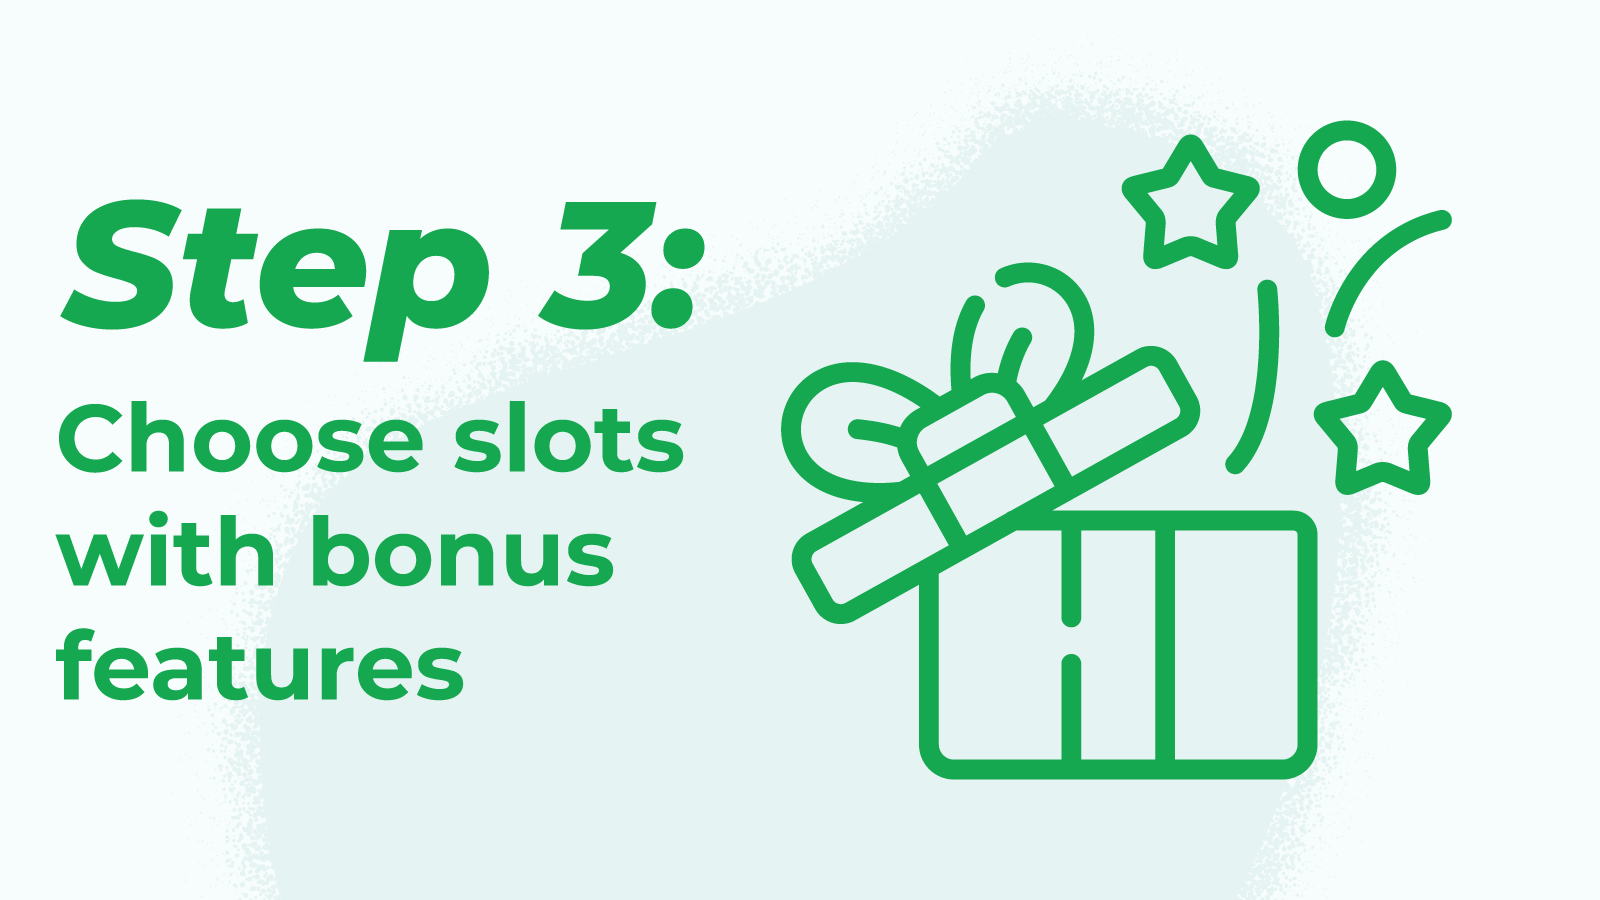 Step 3: Choose slots with bonus features